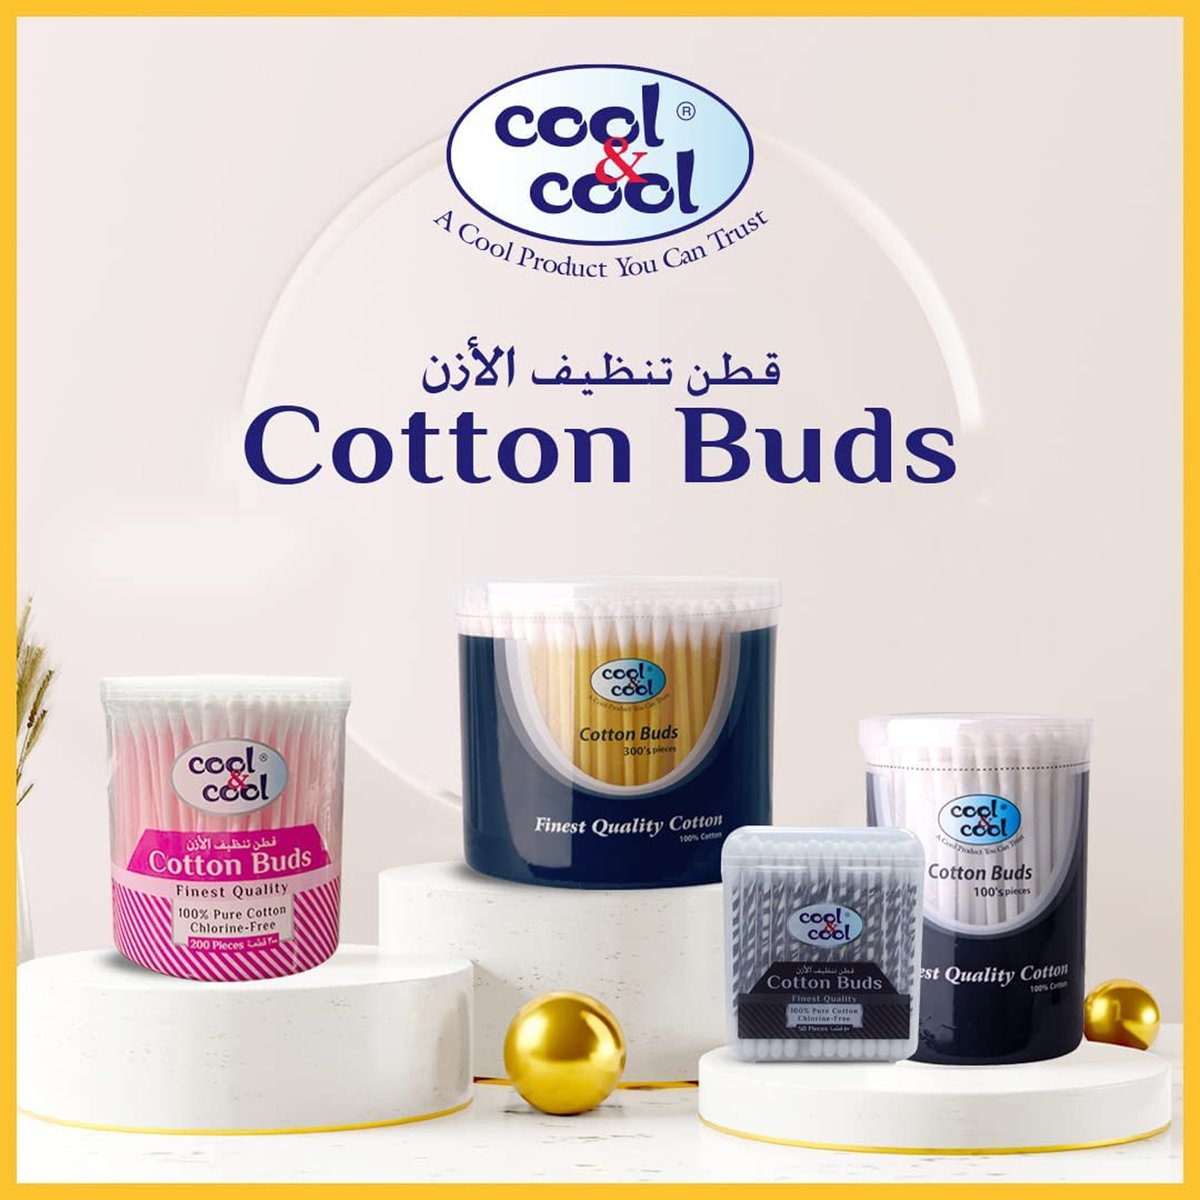 Cool & Cool Cotton Buds 300 pcs